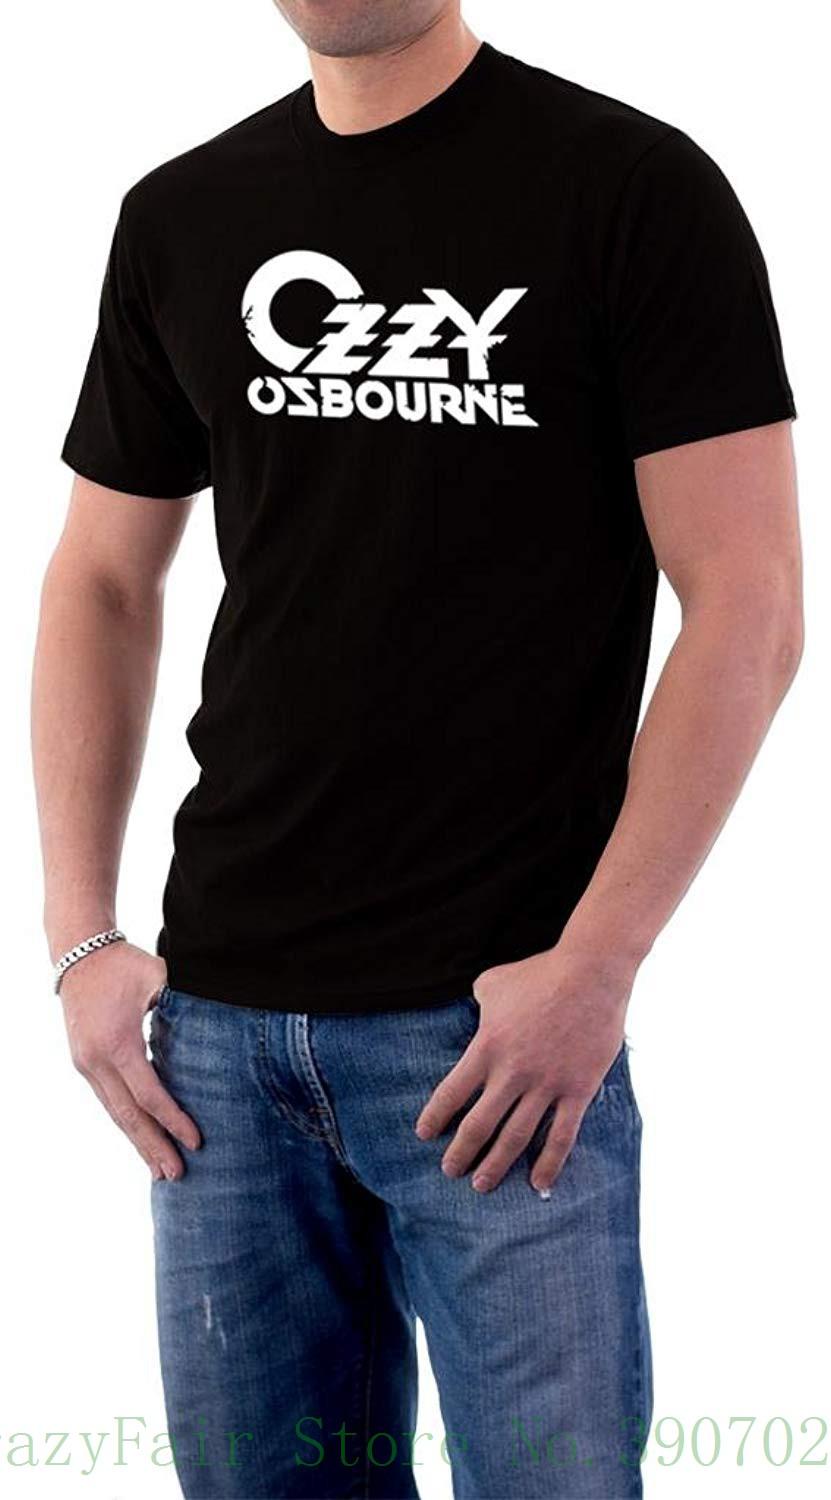 Ozzy Osbourne Band Logo - Ozzy Osbourne Black Sabbath Band Logo Men'S T Shirt For Man Hipster ...